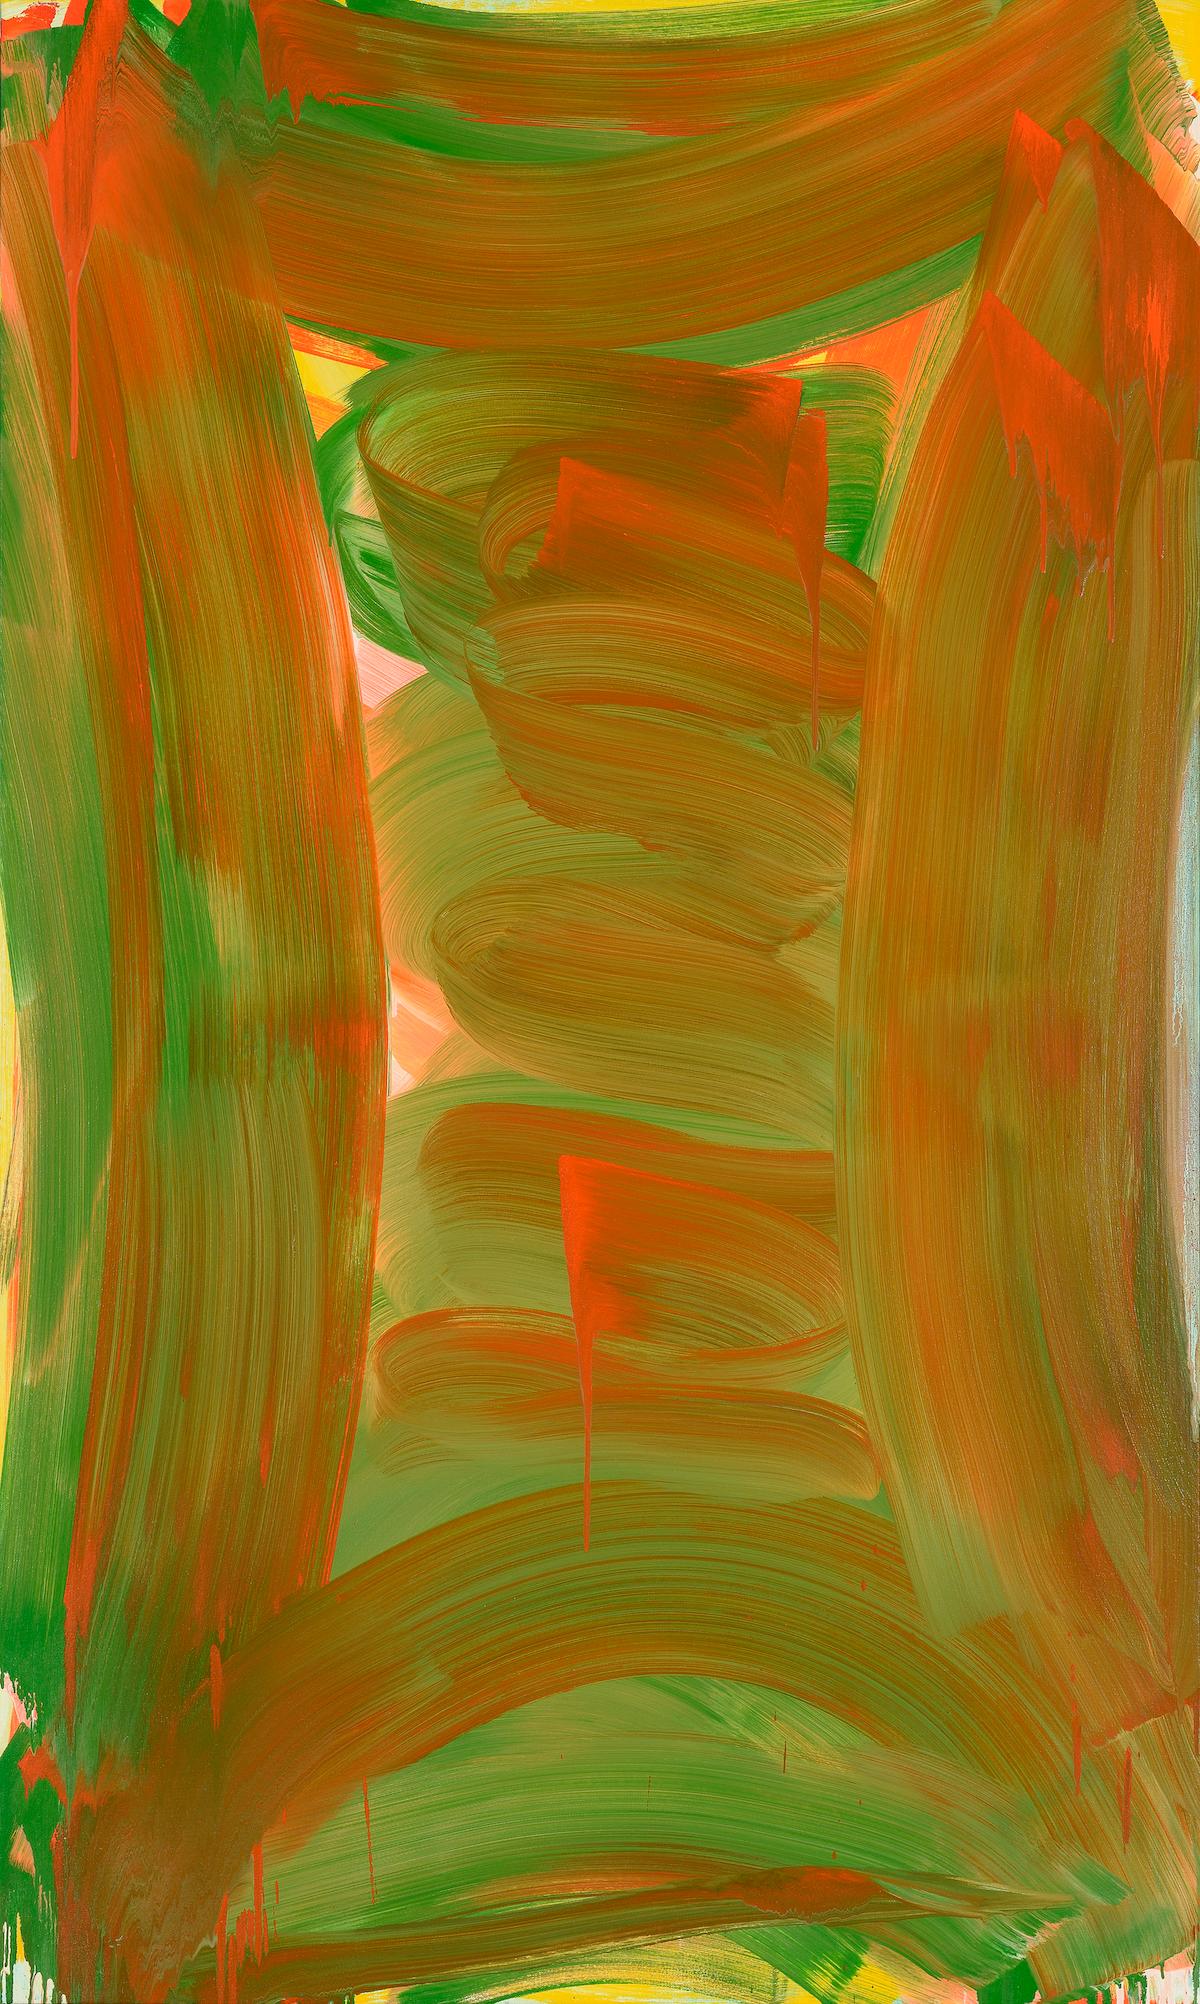 Anne Russinof, Grand Vault 2015, huile sur toile, champ de couleurs, abstraction